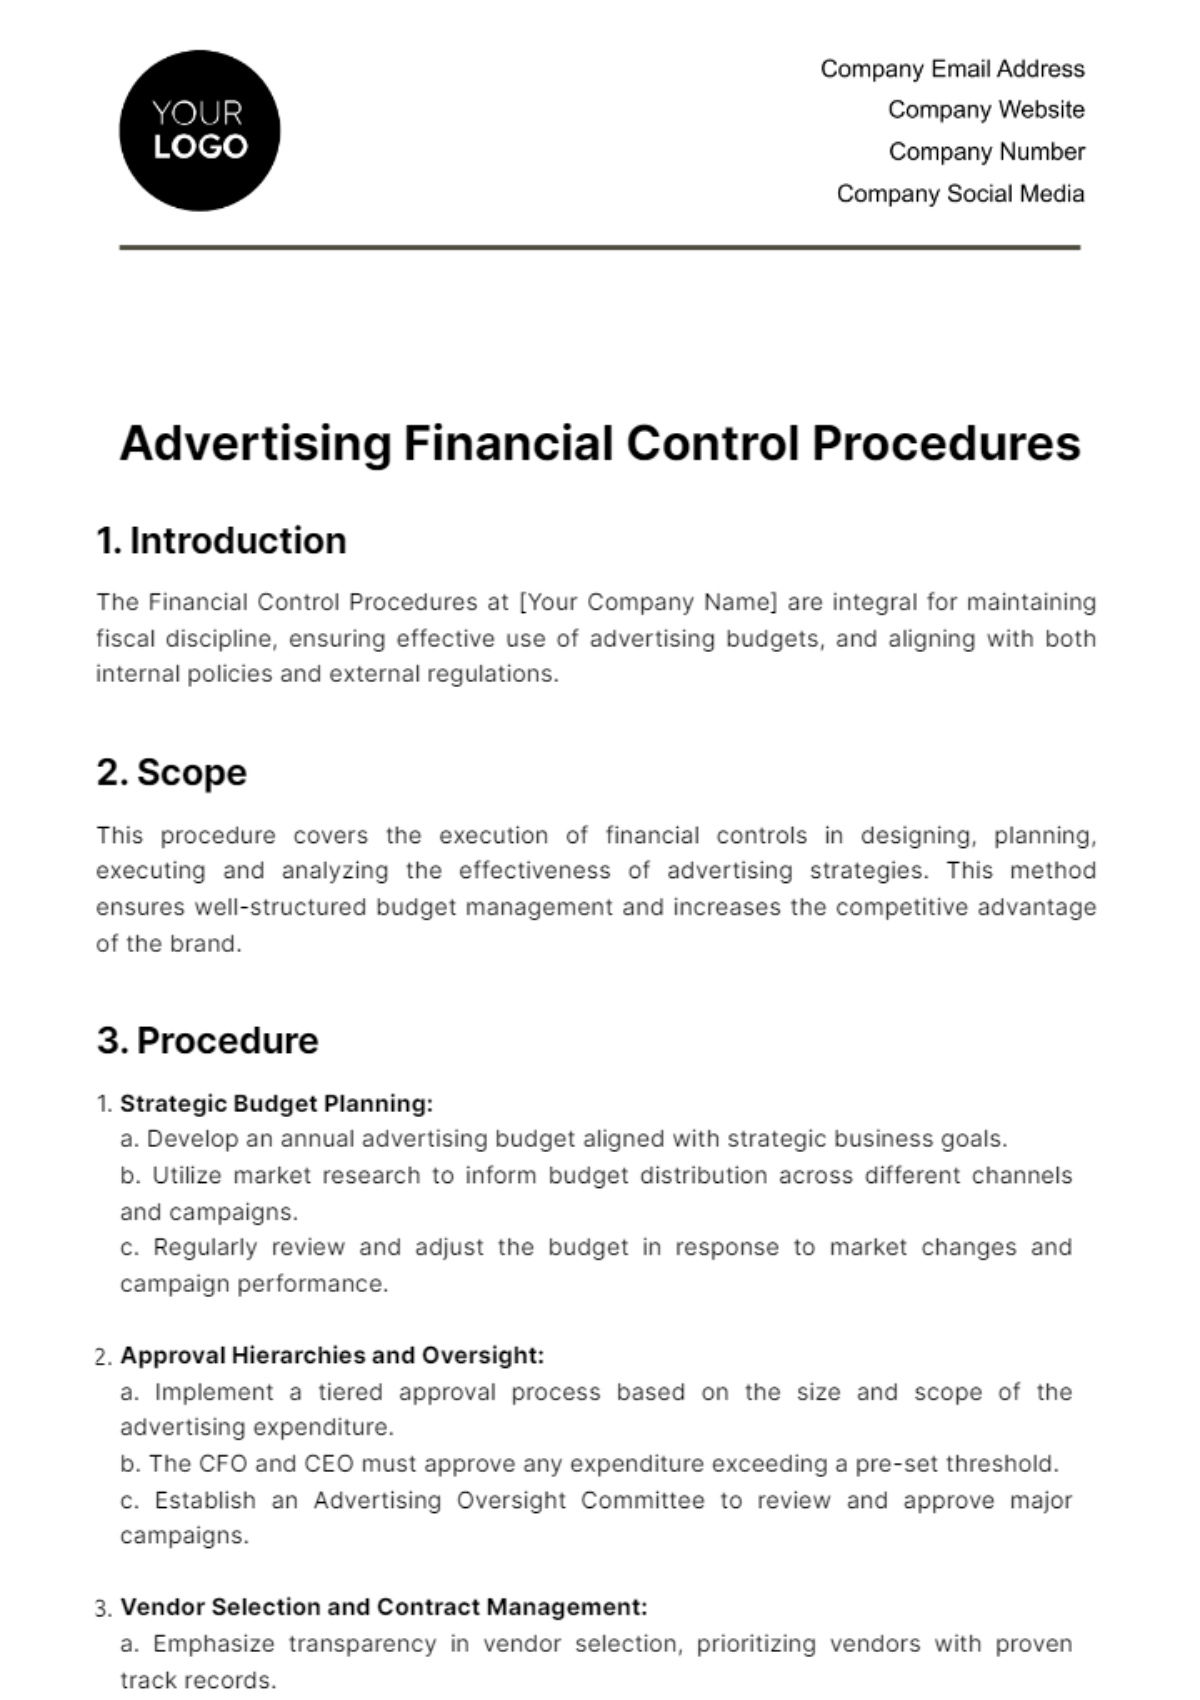 Advertising Financial Control Procedures Template